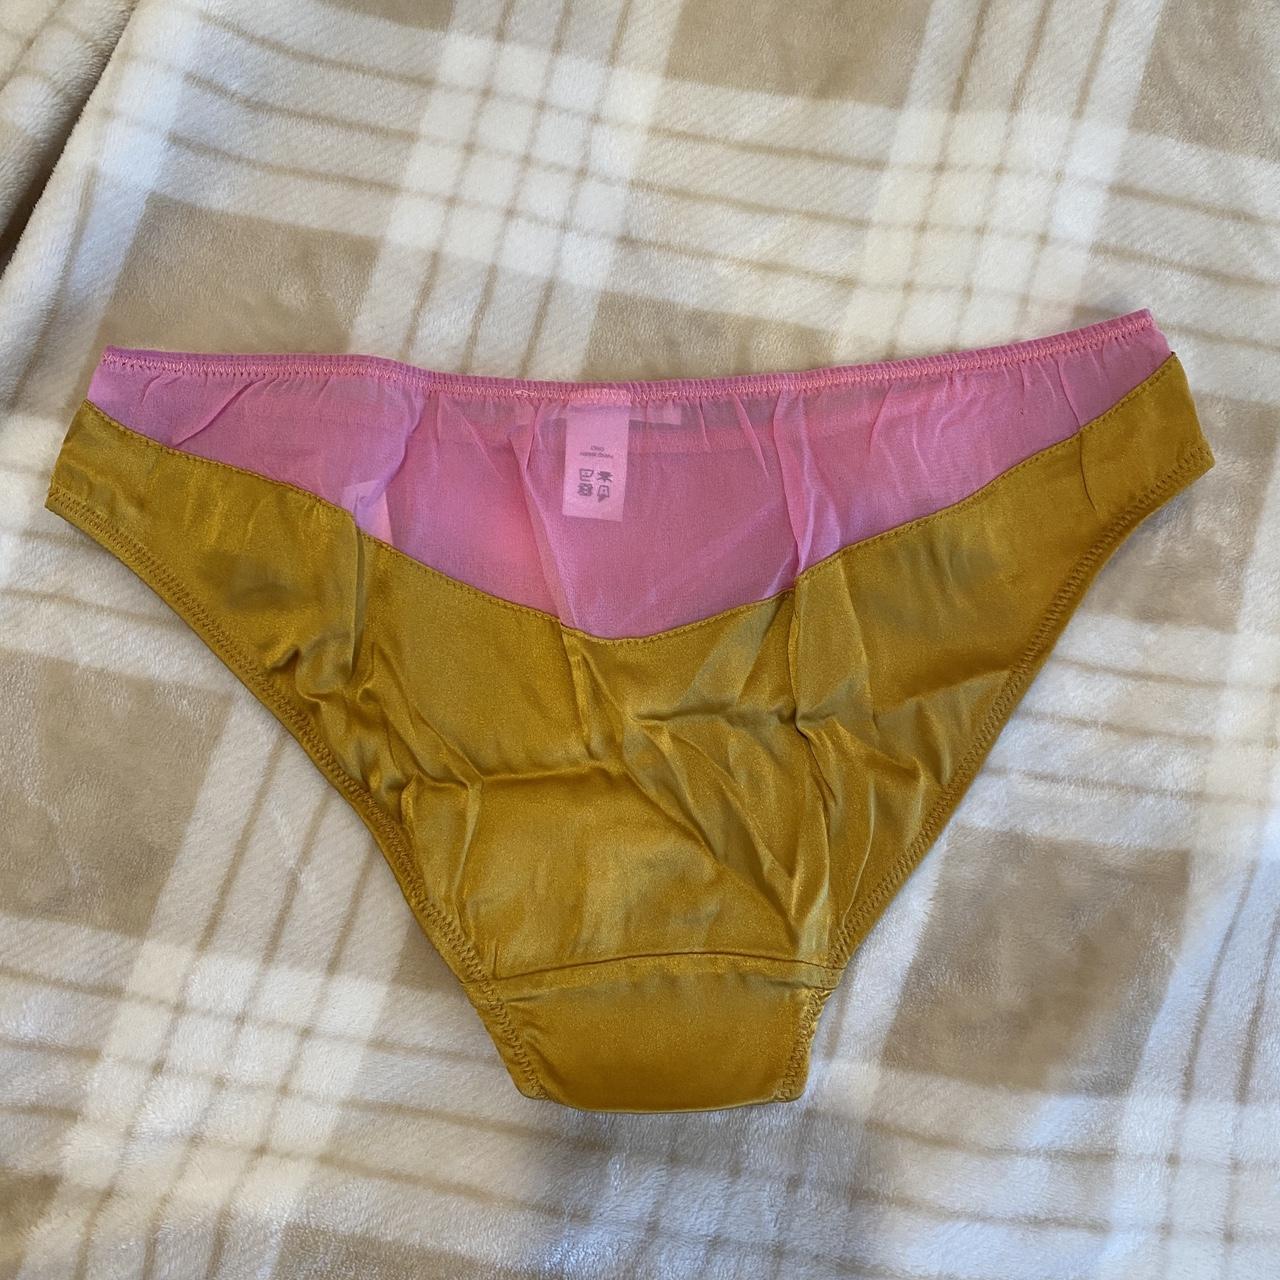 Araks Women's Gold and Pink Panties (2)